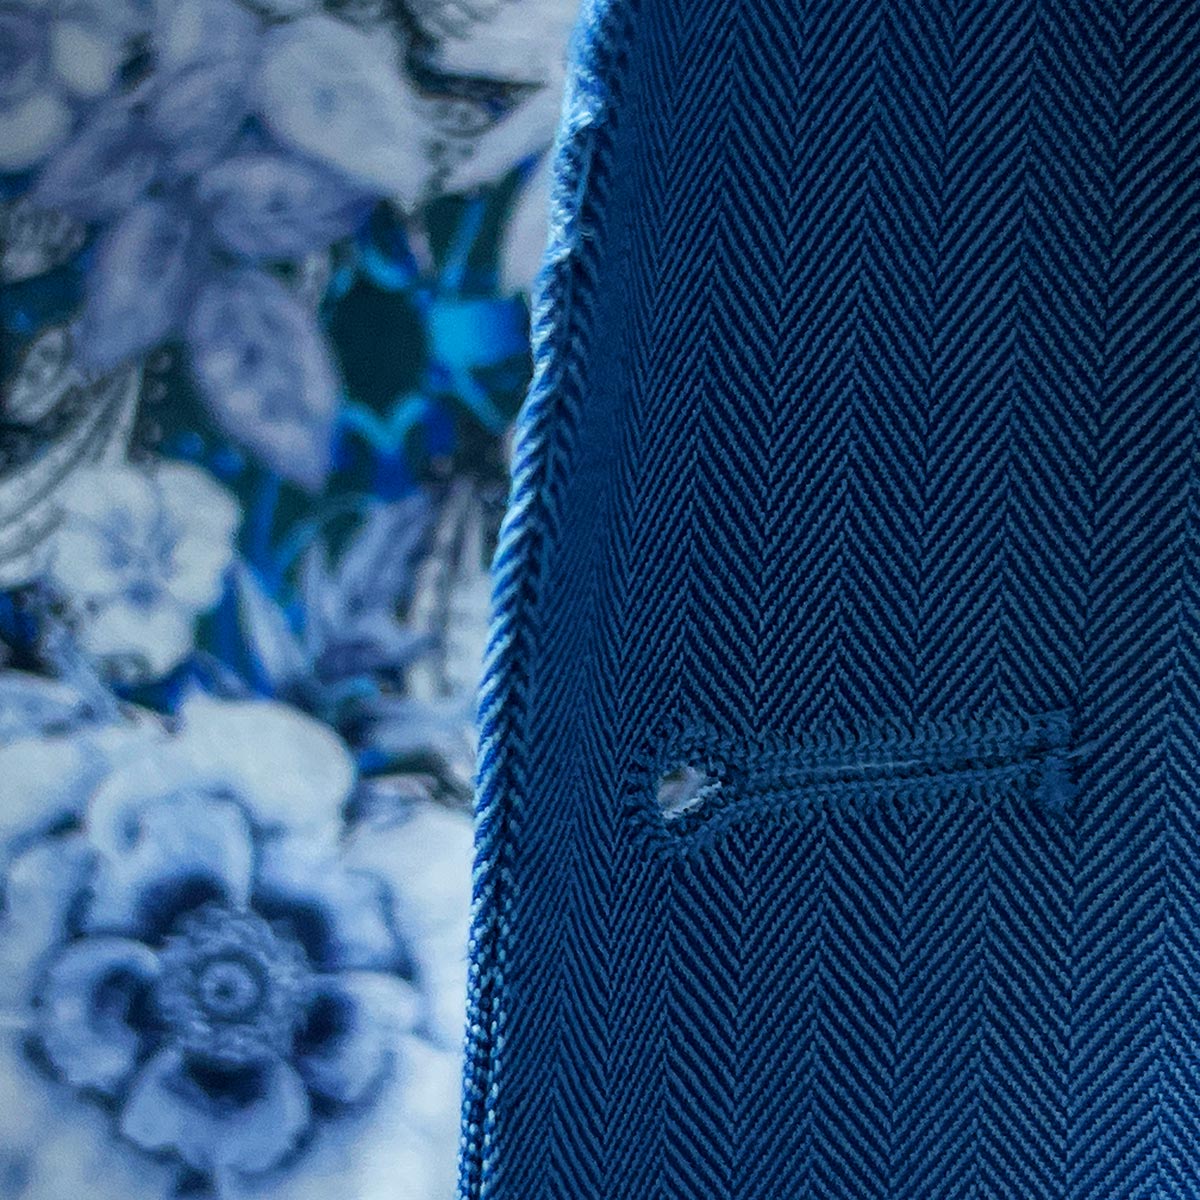 Superior quality men's blue herringbone suit made from Super 120s Australian Merino wool.